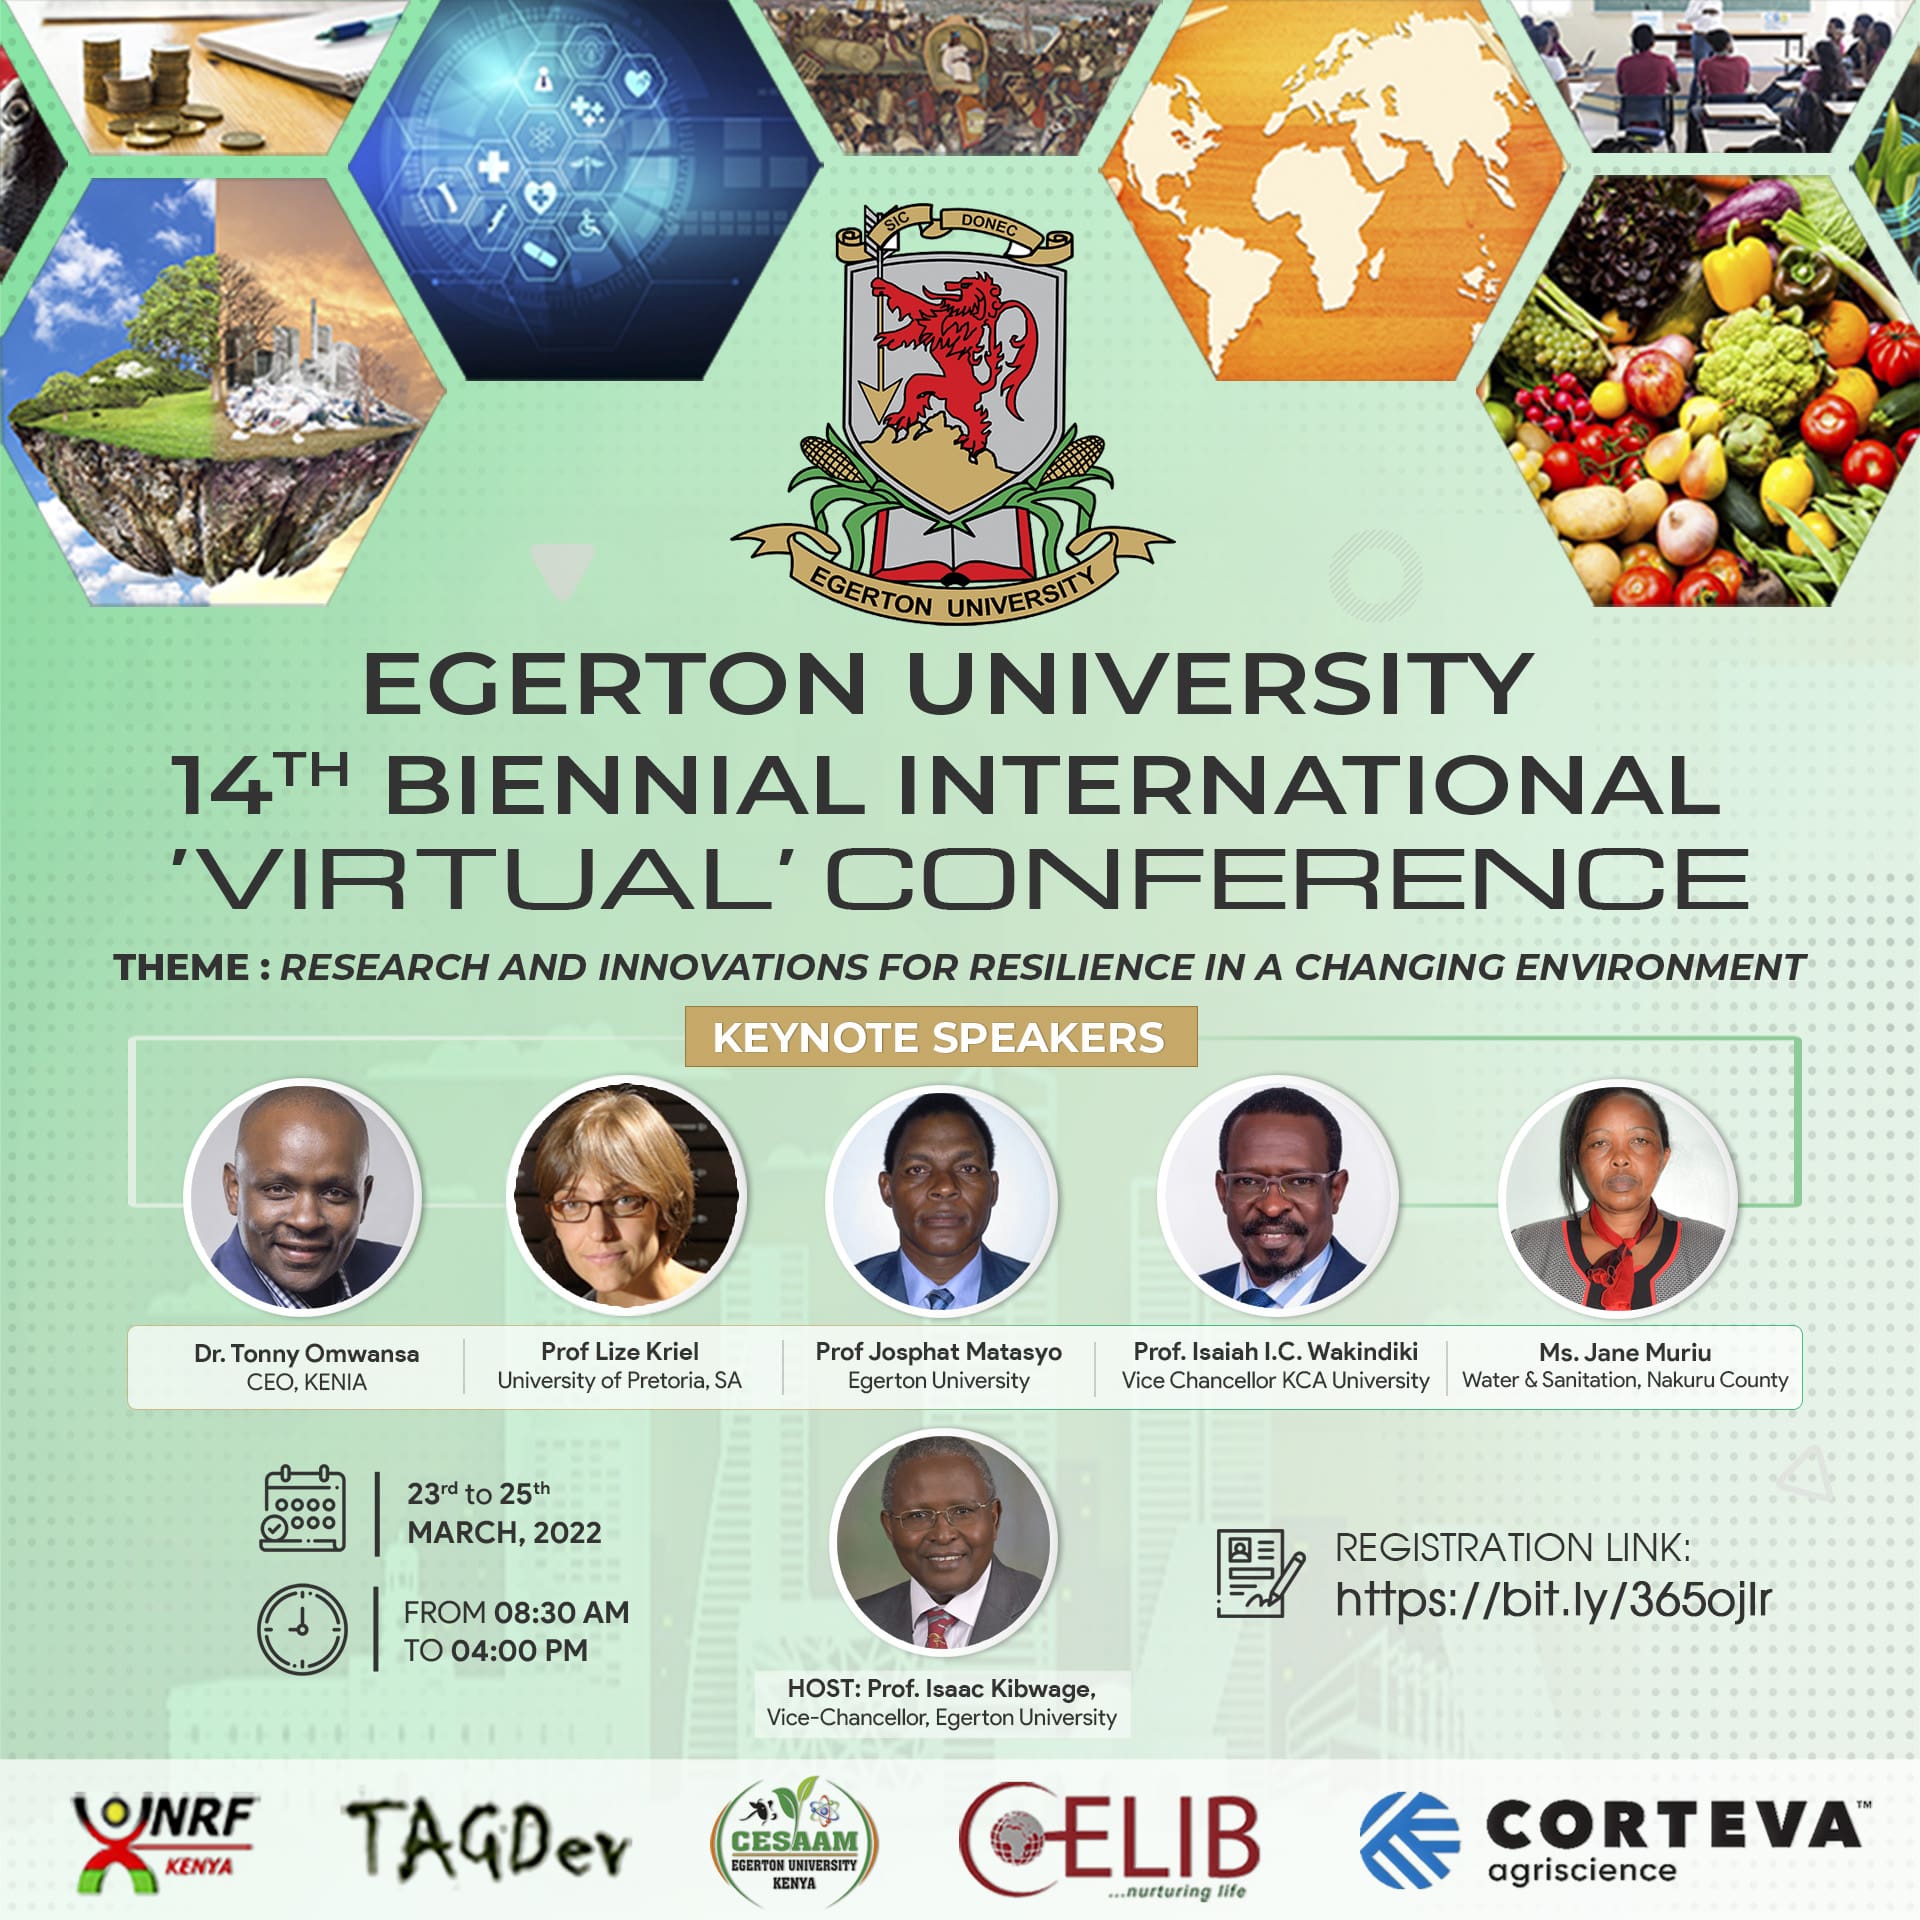 Egerton University 14th Biennial International Conference